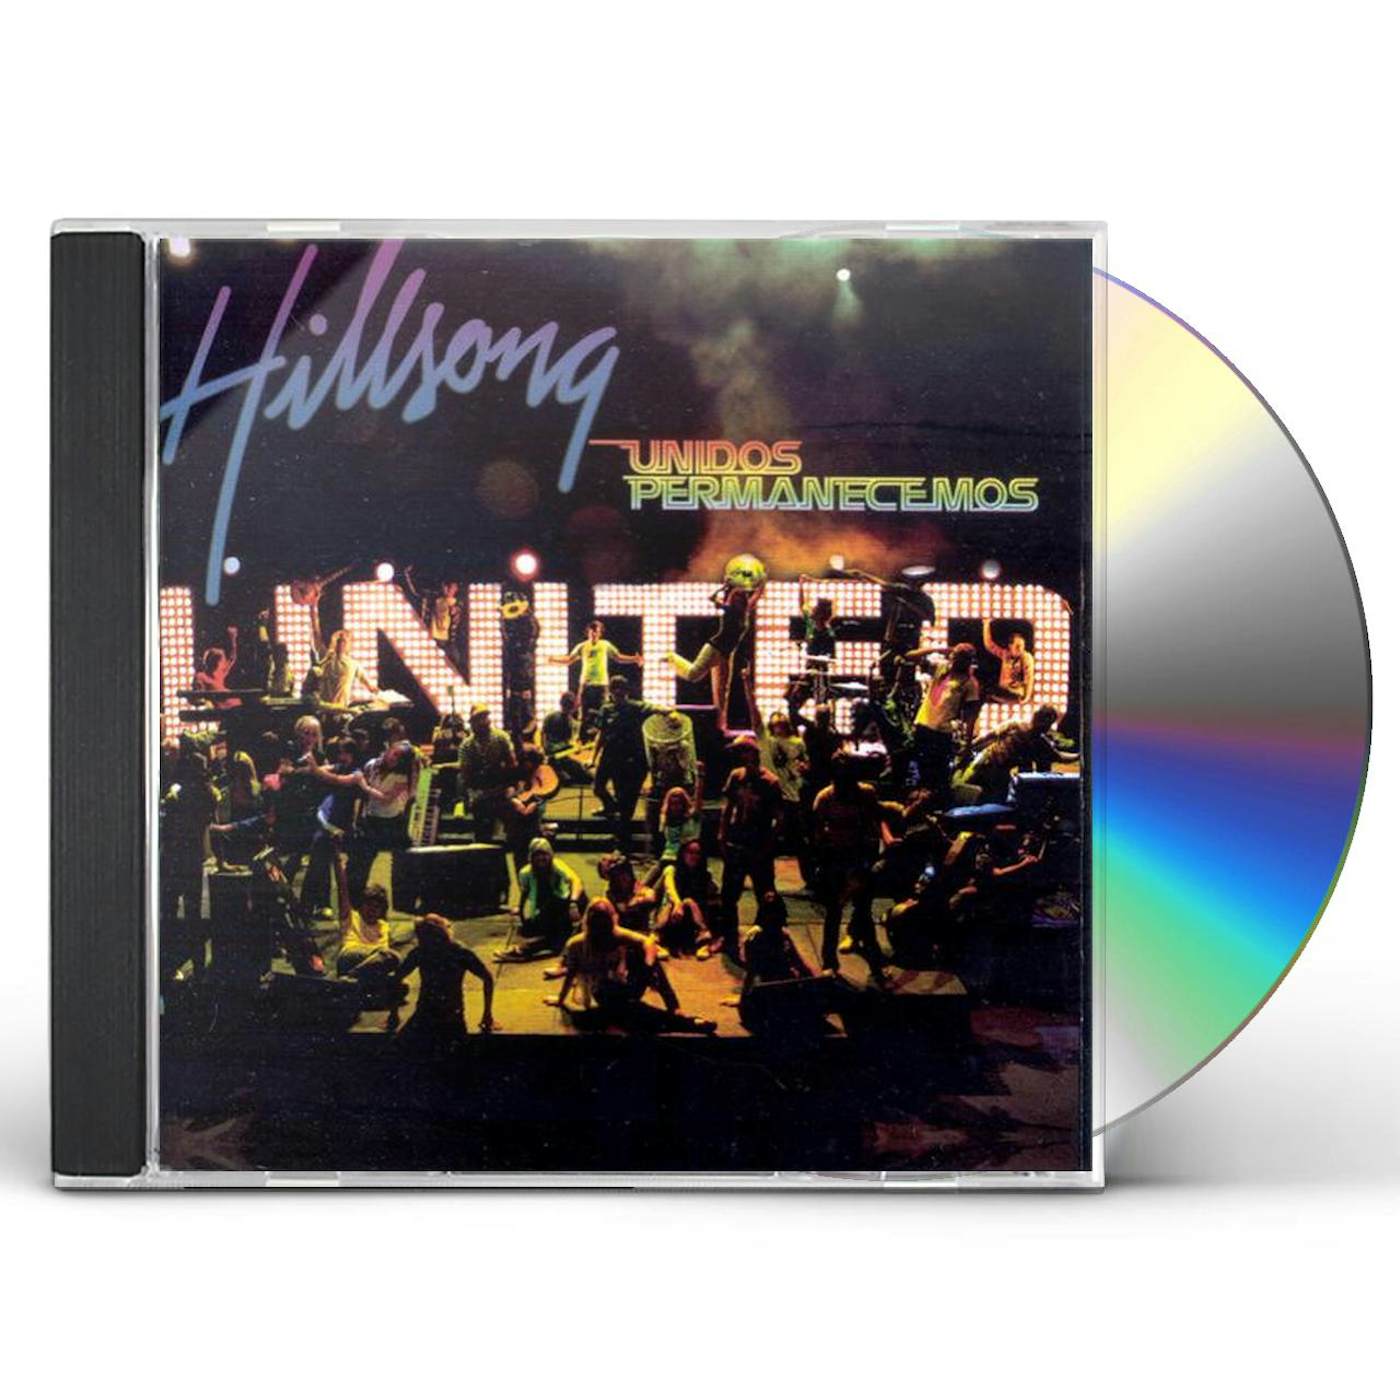 Hillsong UNITED UNIDOS PERMANECEMOS CD